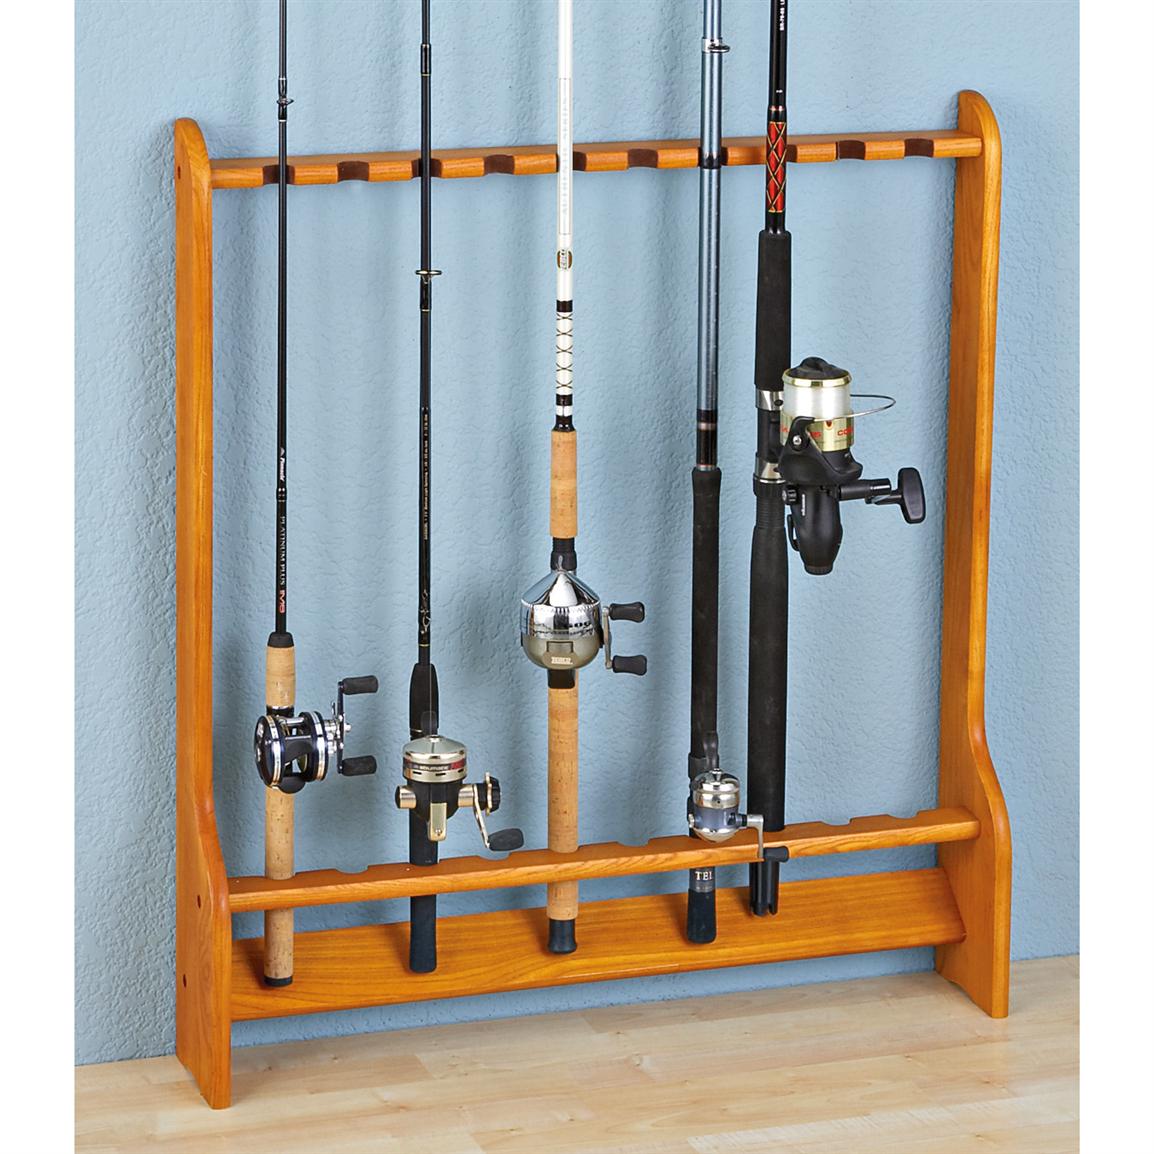 Confident Fishing pole racks plans | Janny